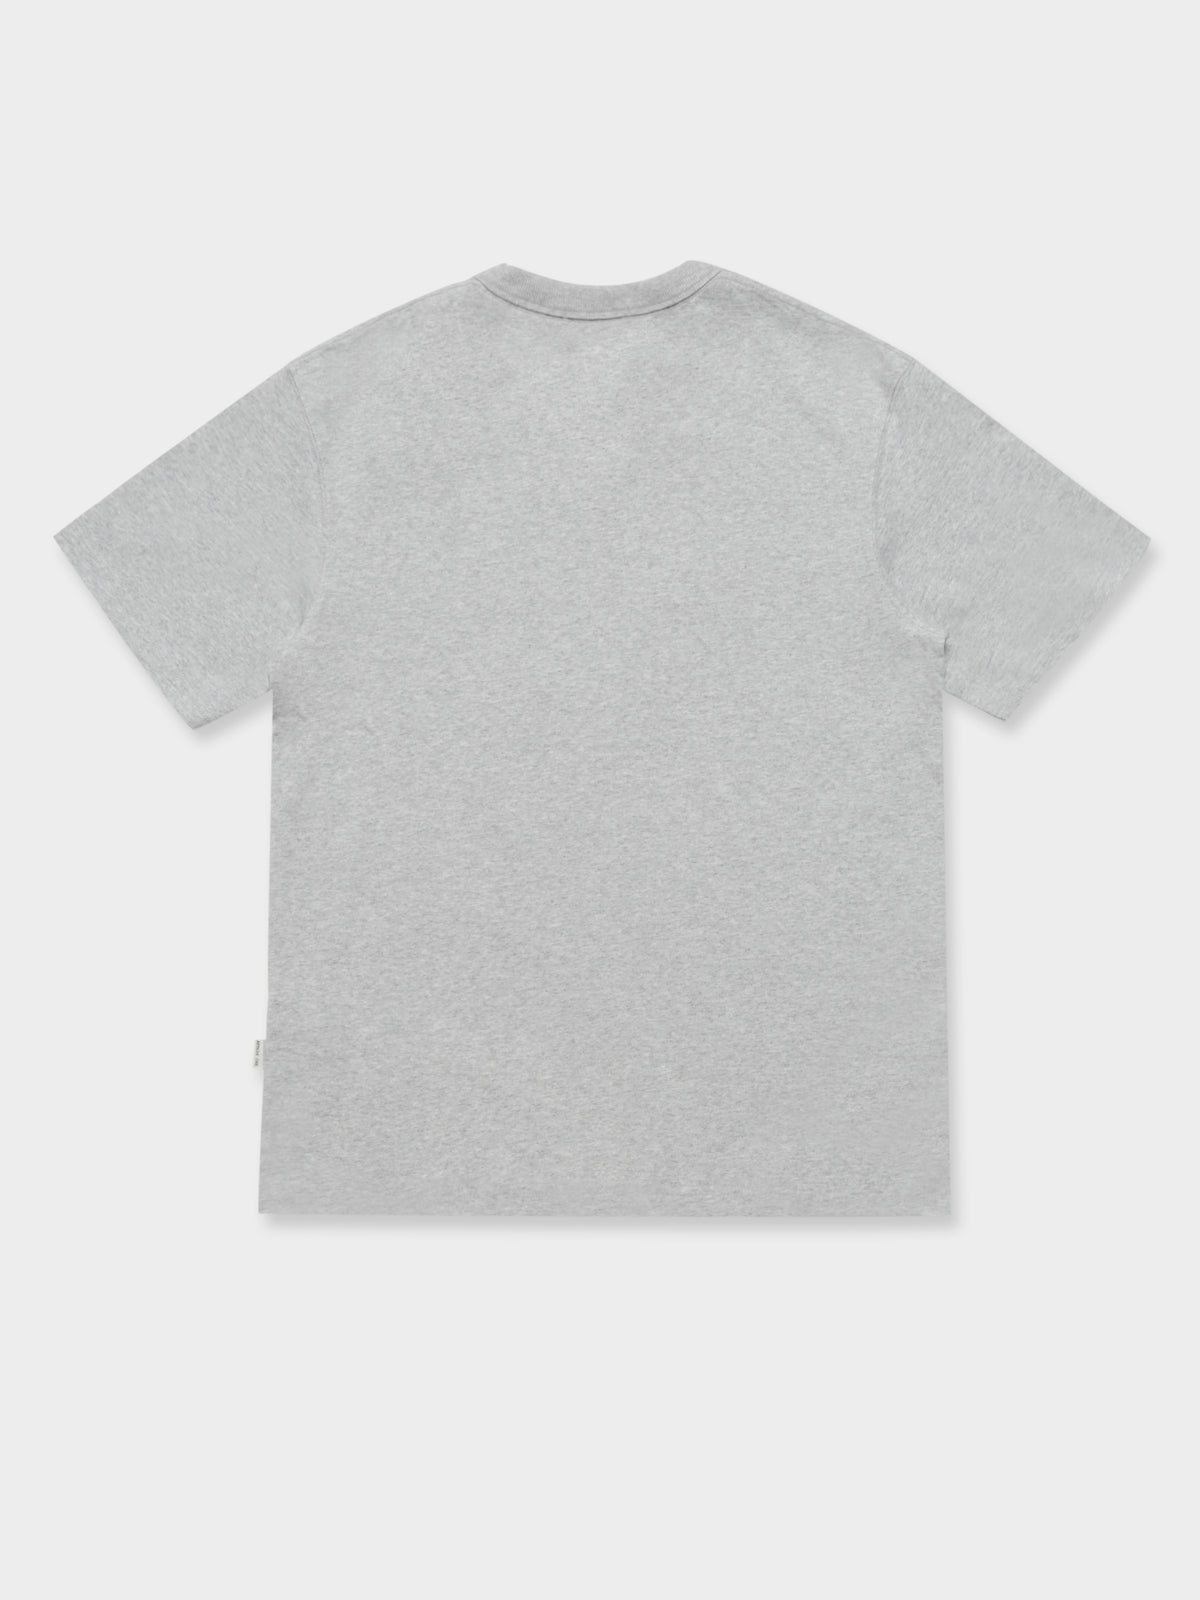 Heavyweight Crew T-Shirt in Grey Marle